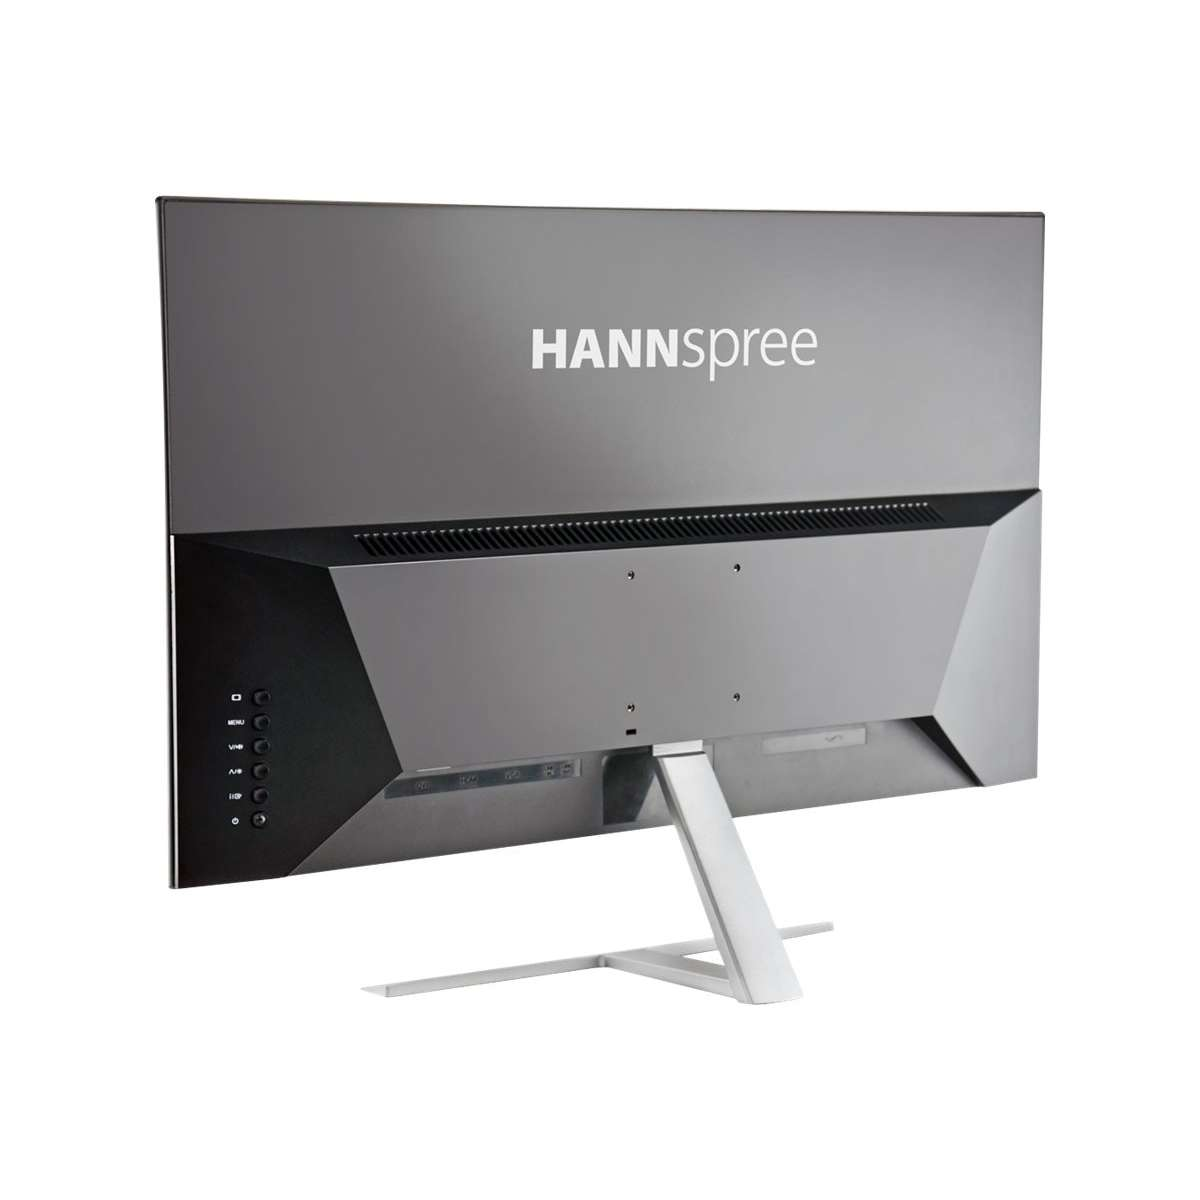 HANNSPREE HS 249 Reaktionszeit ) ms Full-HD Monitor 23,8 PSB (5 Zoll